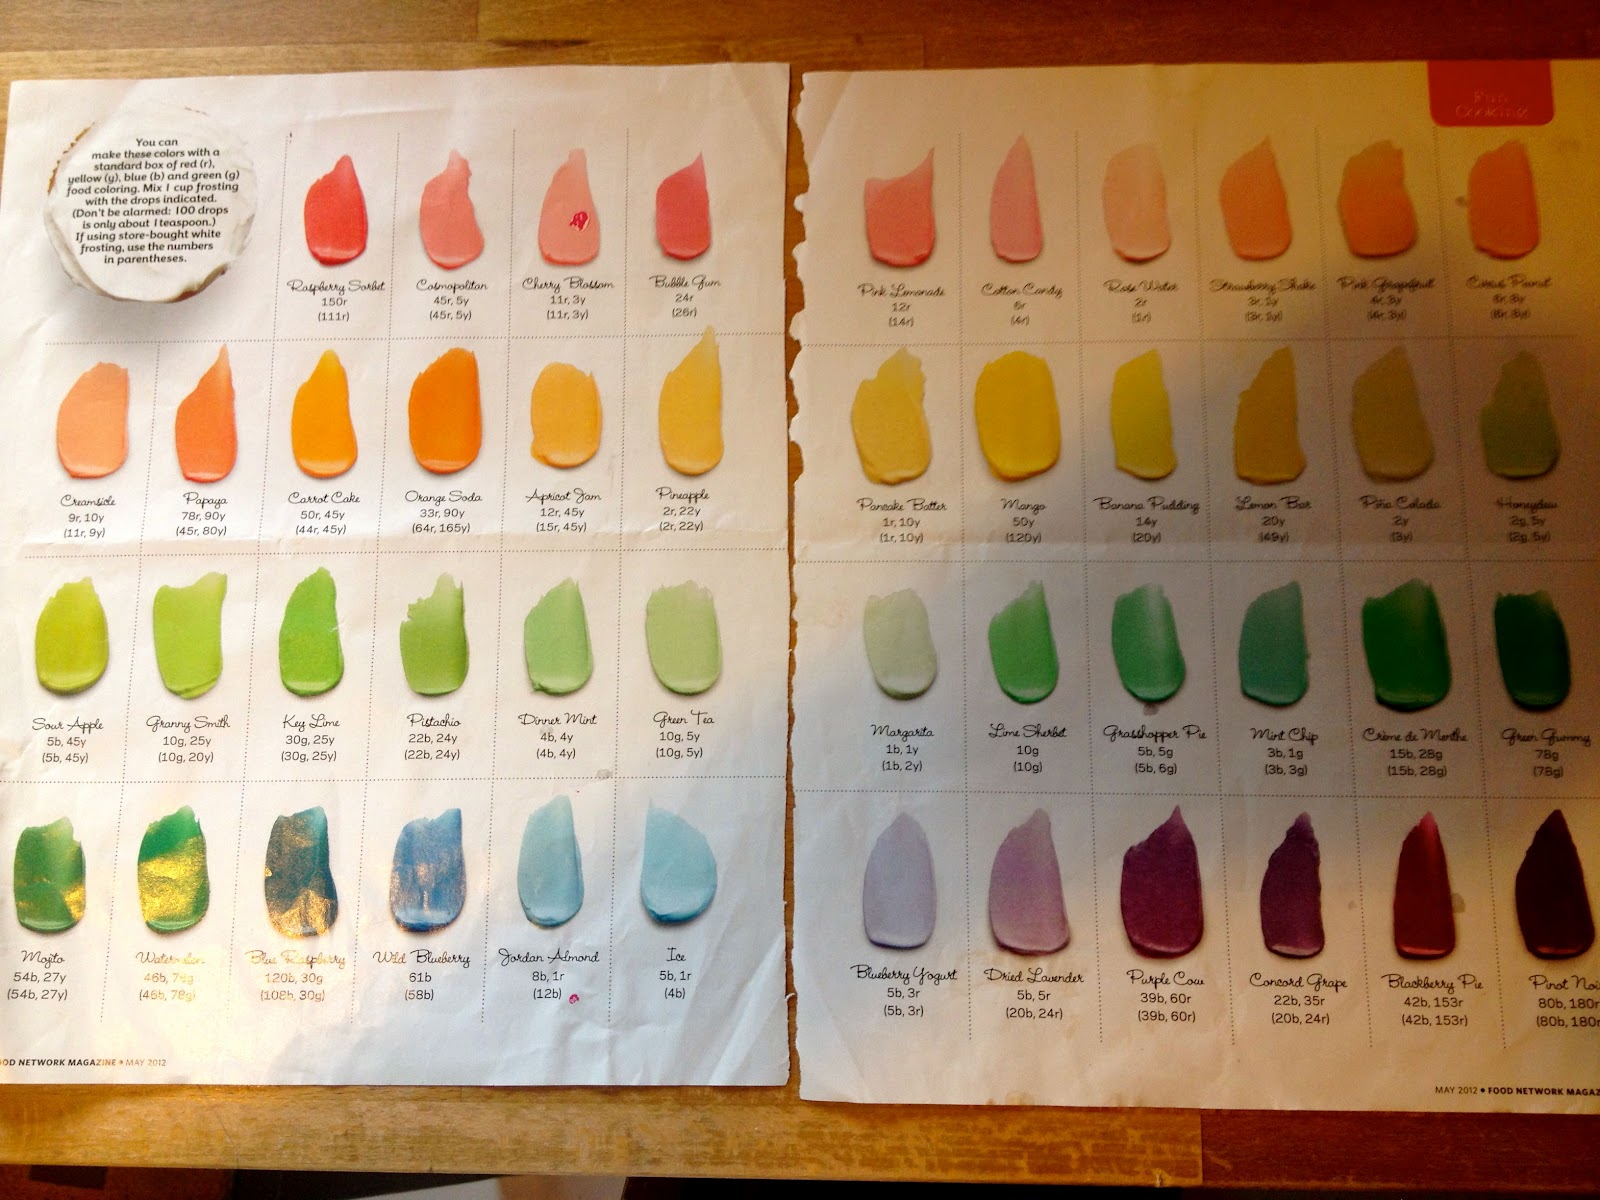 Heidi's Mix: Coloring Tips